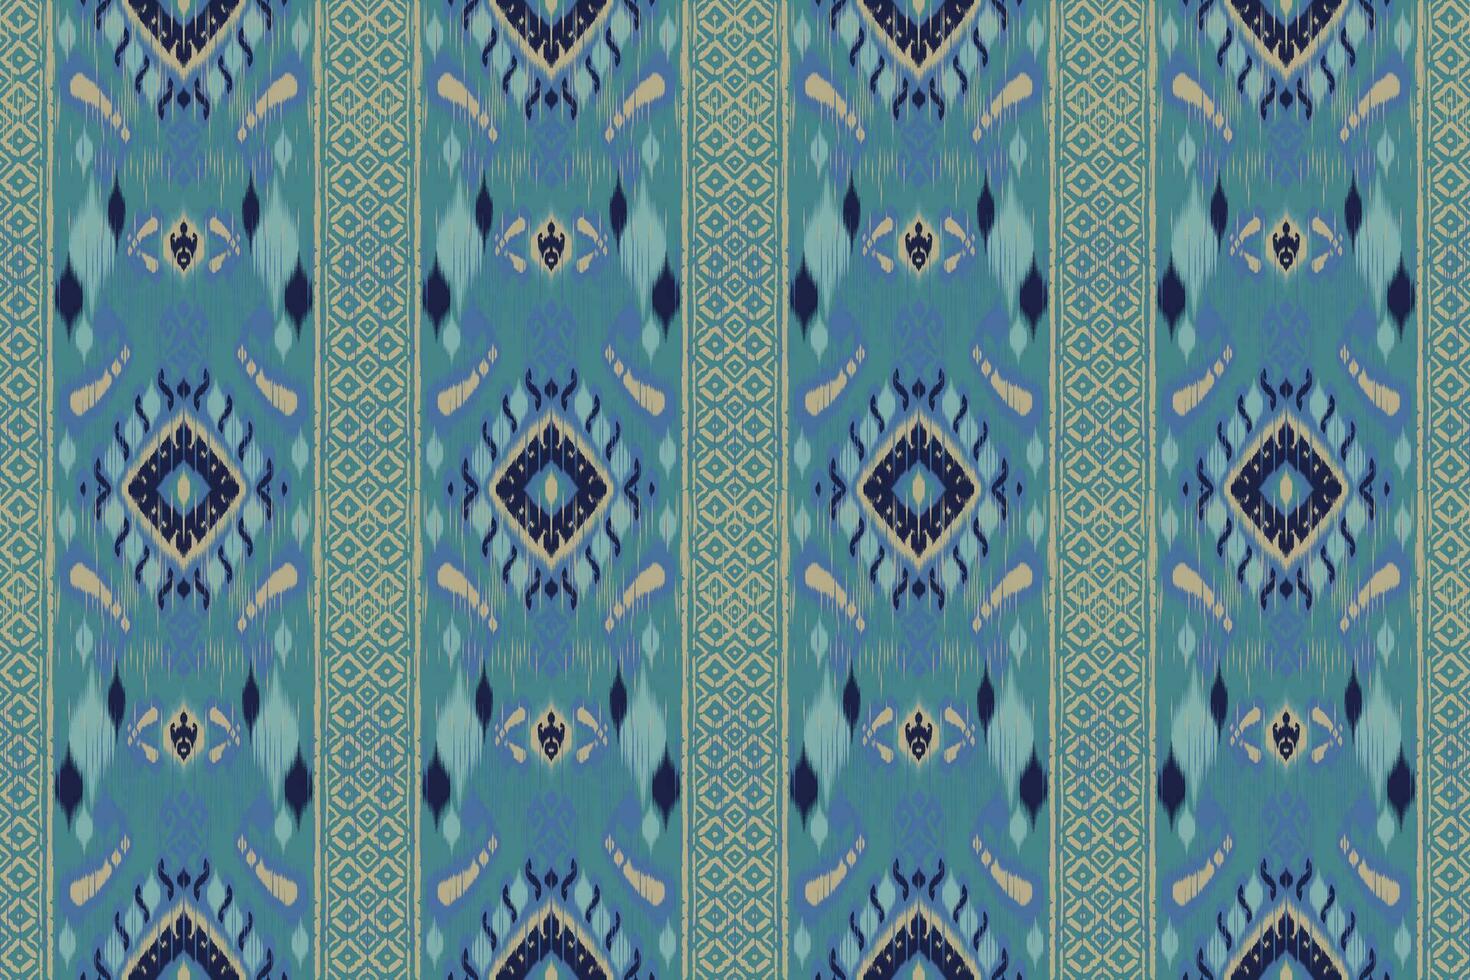 ikat tribal indio sin costura modelo. étnico azteca tela alfombra mandala ornamento nativo boho cheurón textil.geometrico africano americano oriental tradicional vector ilustraciones. bordado estilo.